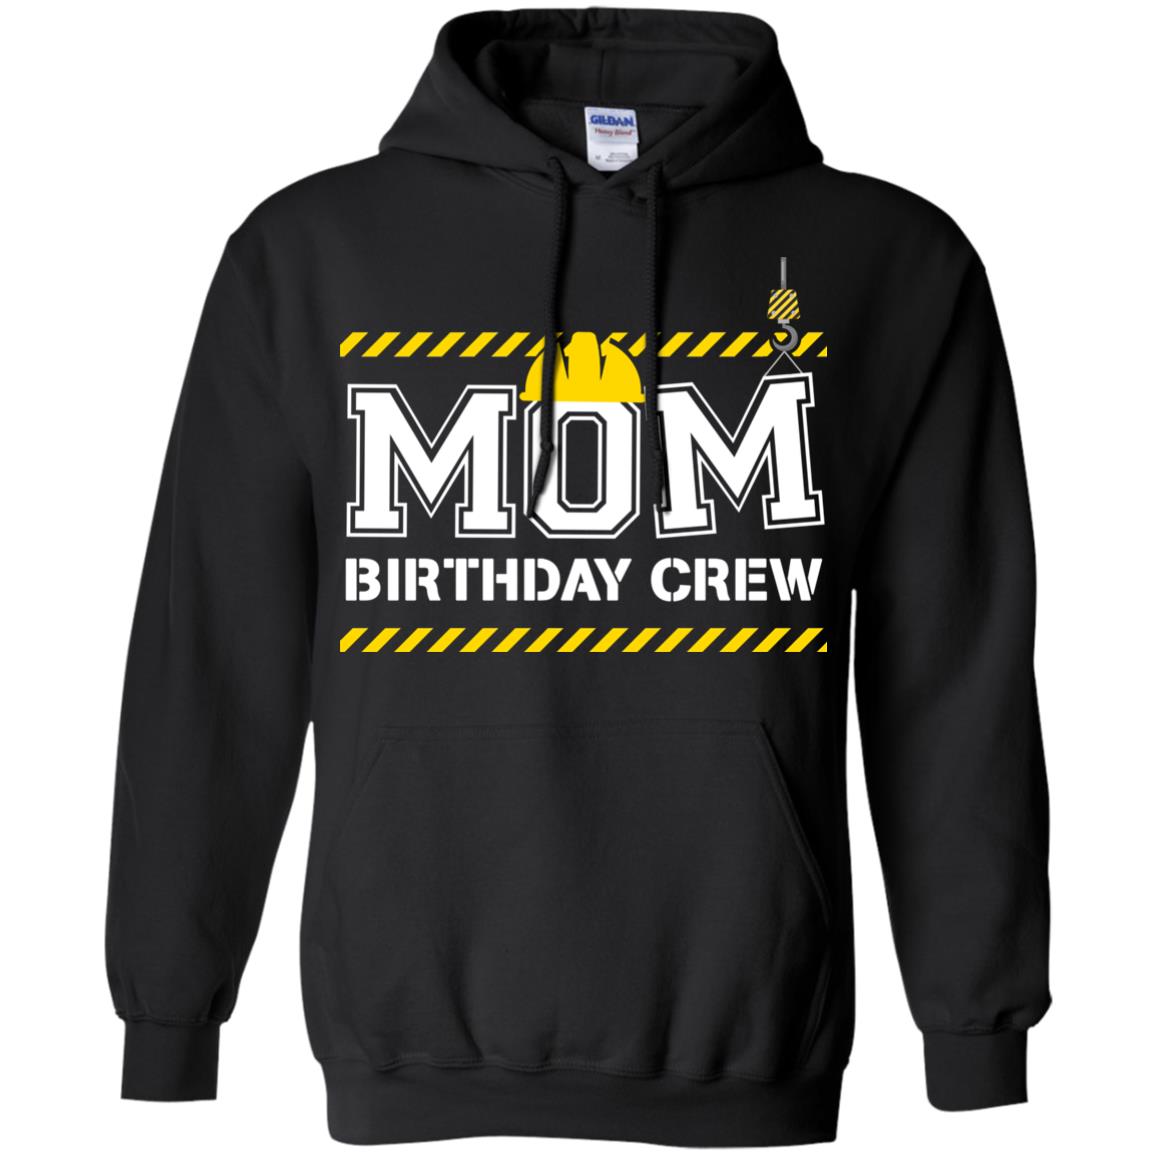 Mom Birthday Crew Construction Worker Shirt For MommyG185 Gildan Pullover Hoodie 8 oz.